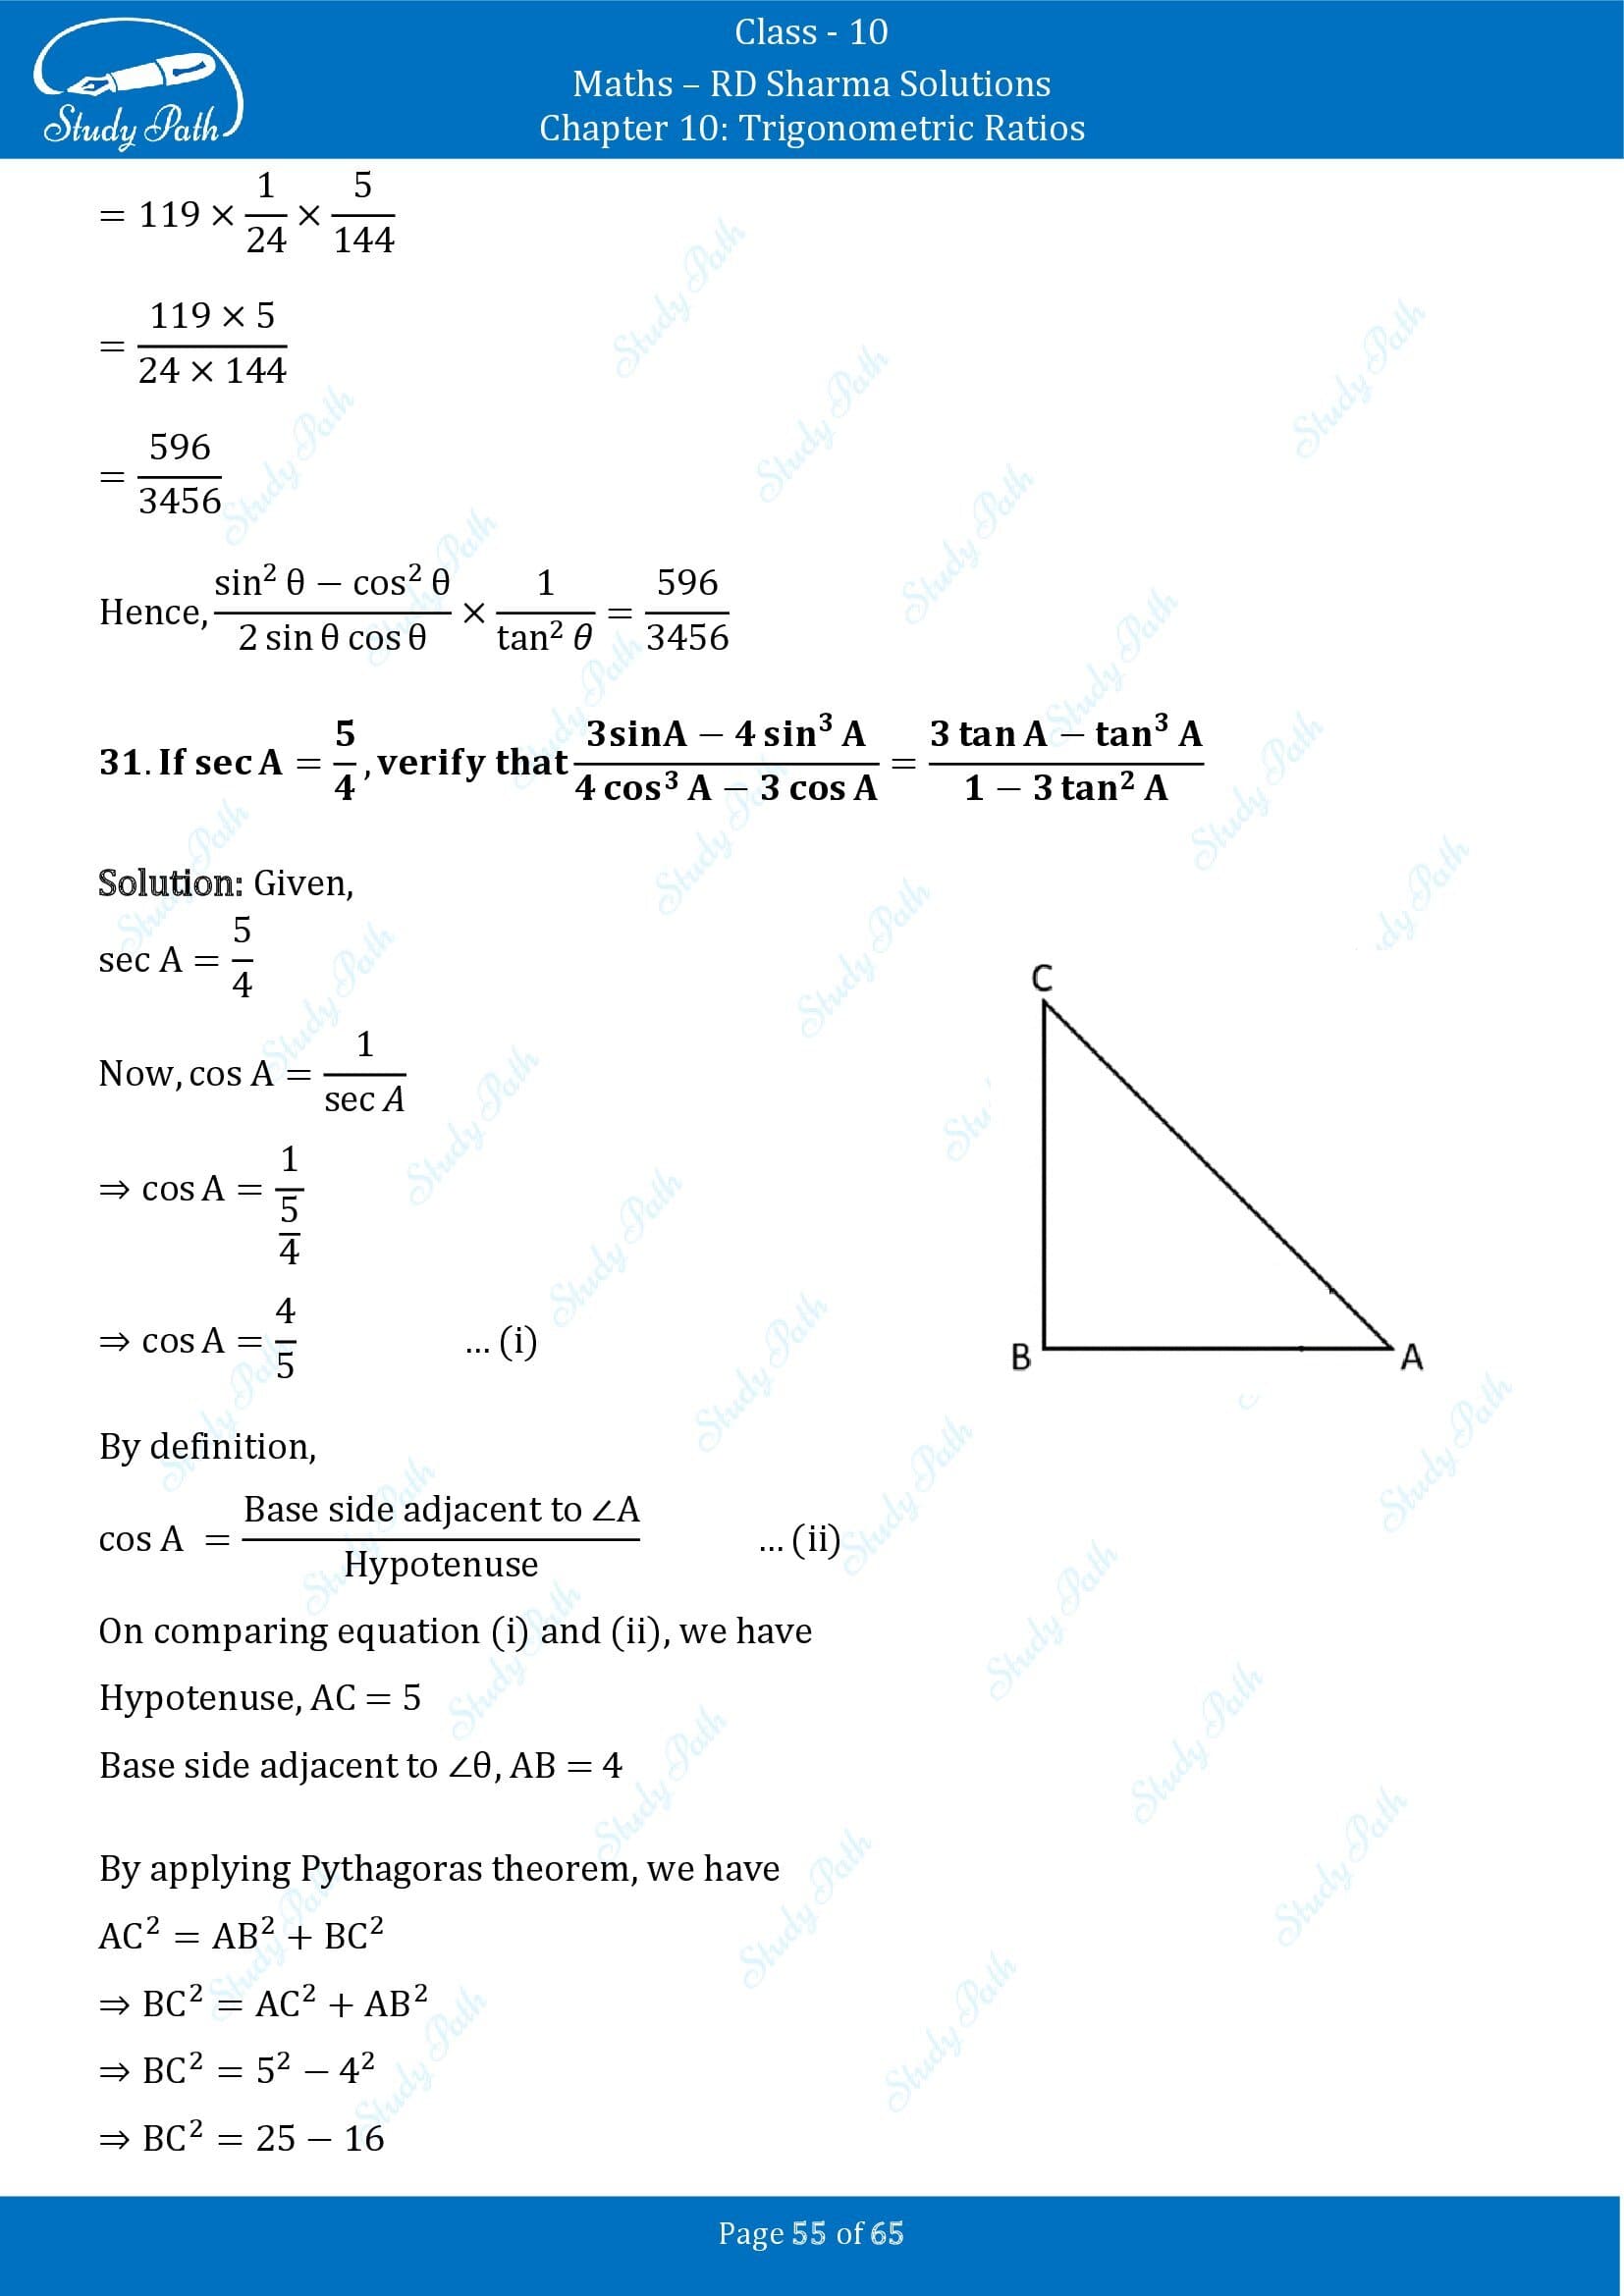 RD Sharma Solutions Class 10 Chapter 10 Trigonometric Ratios Exercise 10.1 00055